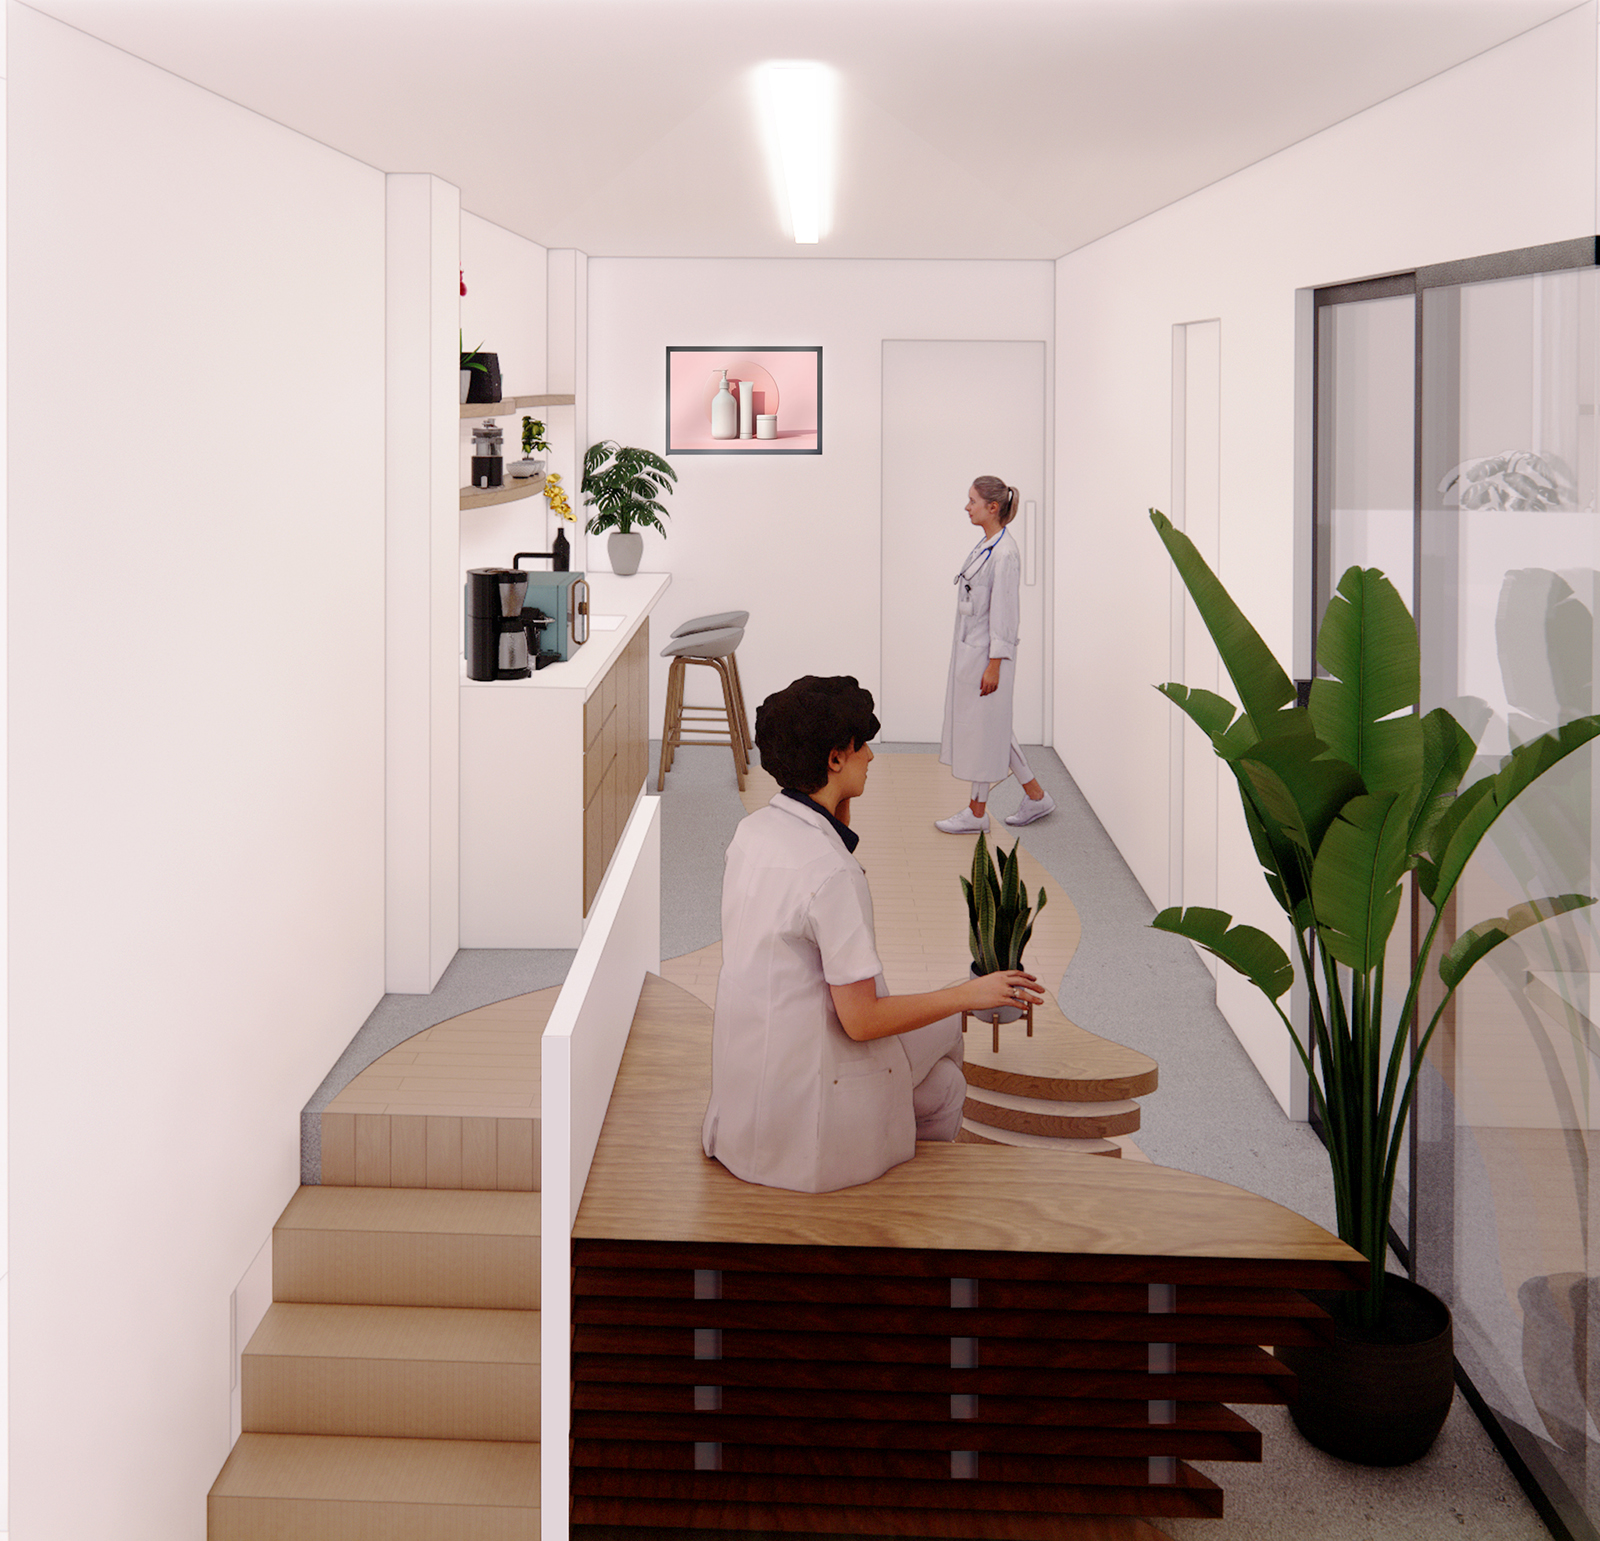 Archisearch Πρόταση συμμετοχής στο Φοιτητικό Αρχιτεκτονικό Διαγωνισμό Ιδεών «Φαρμακείο 2030», των Μαρκουλάκη Ολυμπία, Ντέκα Φωτεινή, Τούρλου Γεωργία